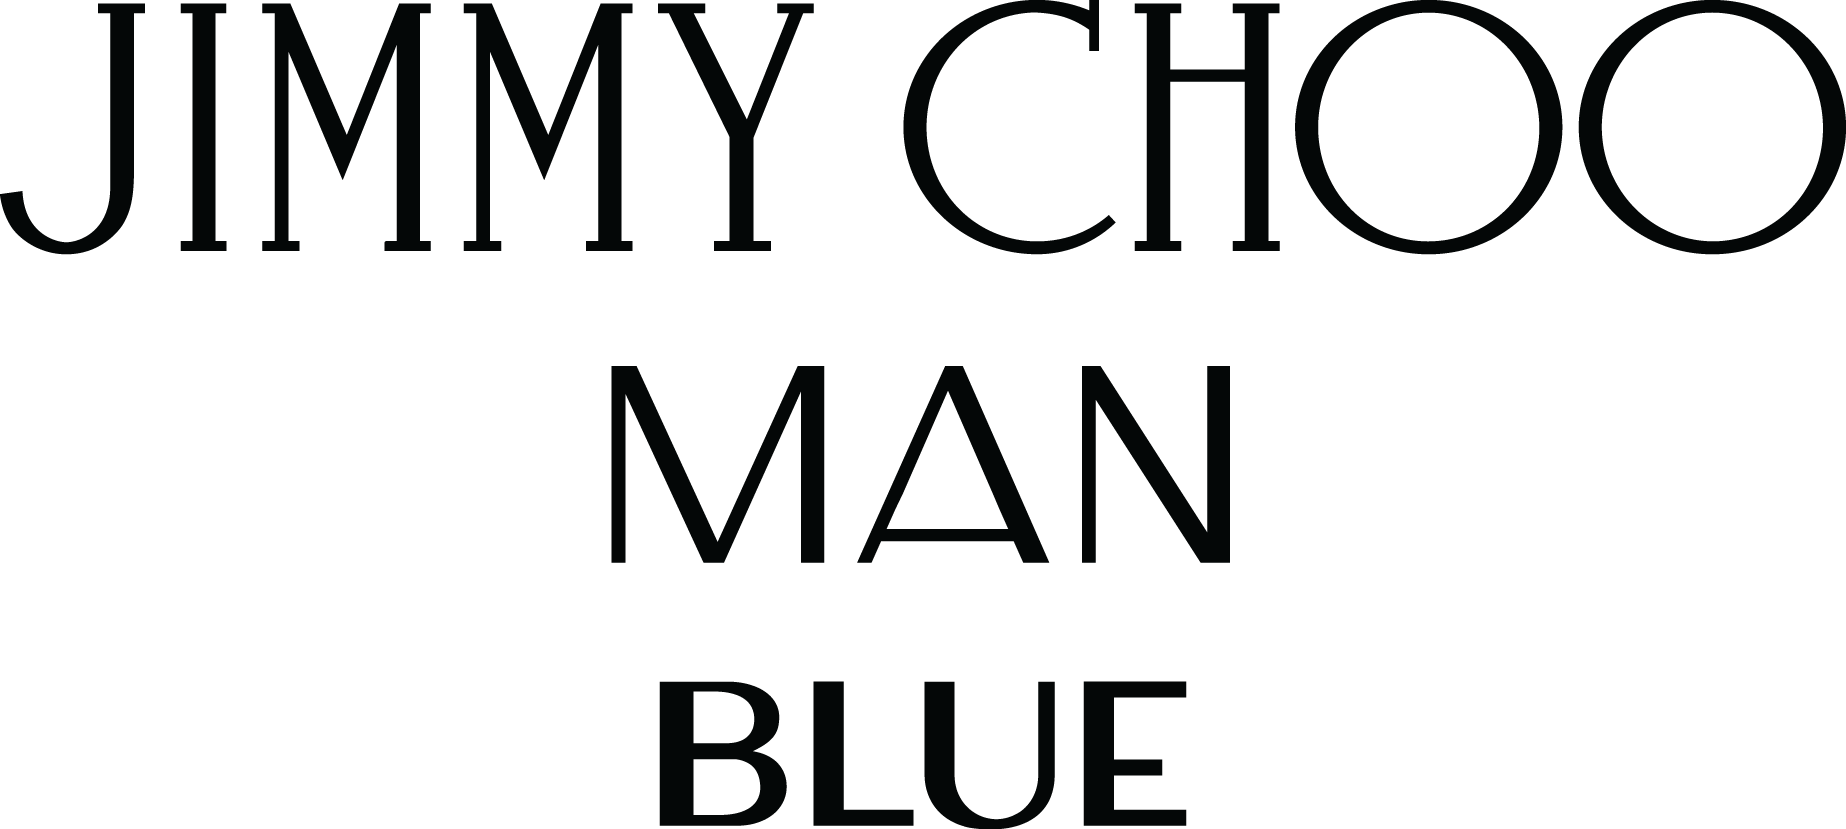 Man Blue by Jimmy Choo